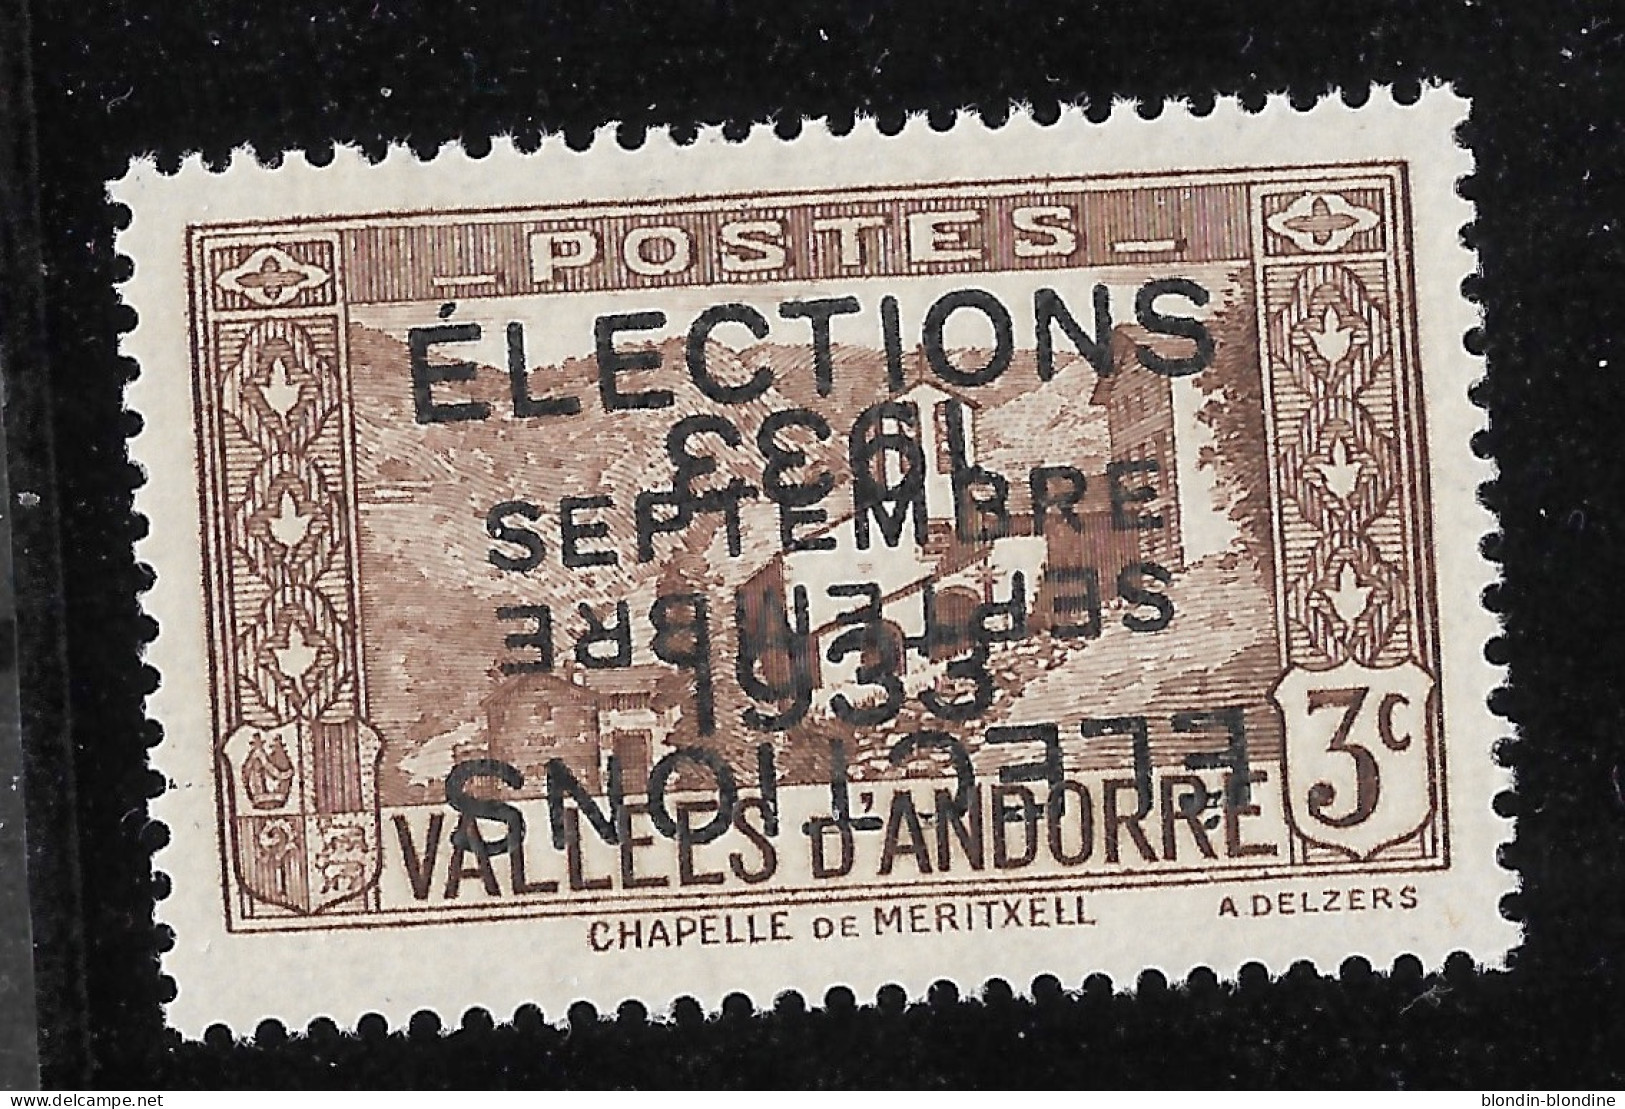 ANDORRE 1933 DALLAY 26A NEUF** TB COTE 900e ! - Unused Stamps